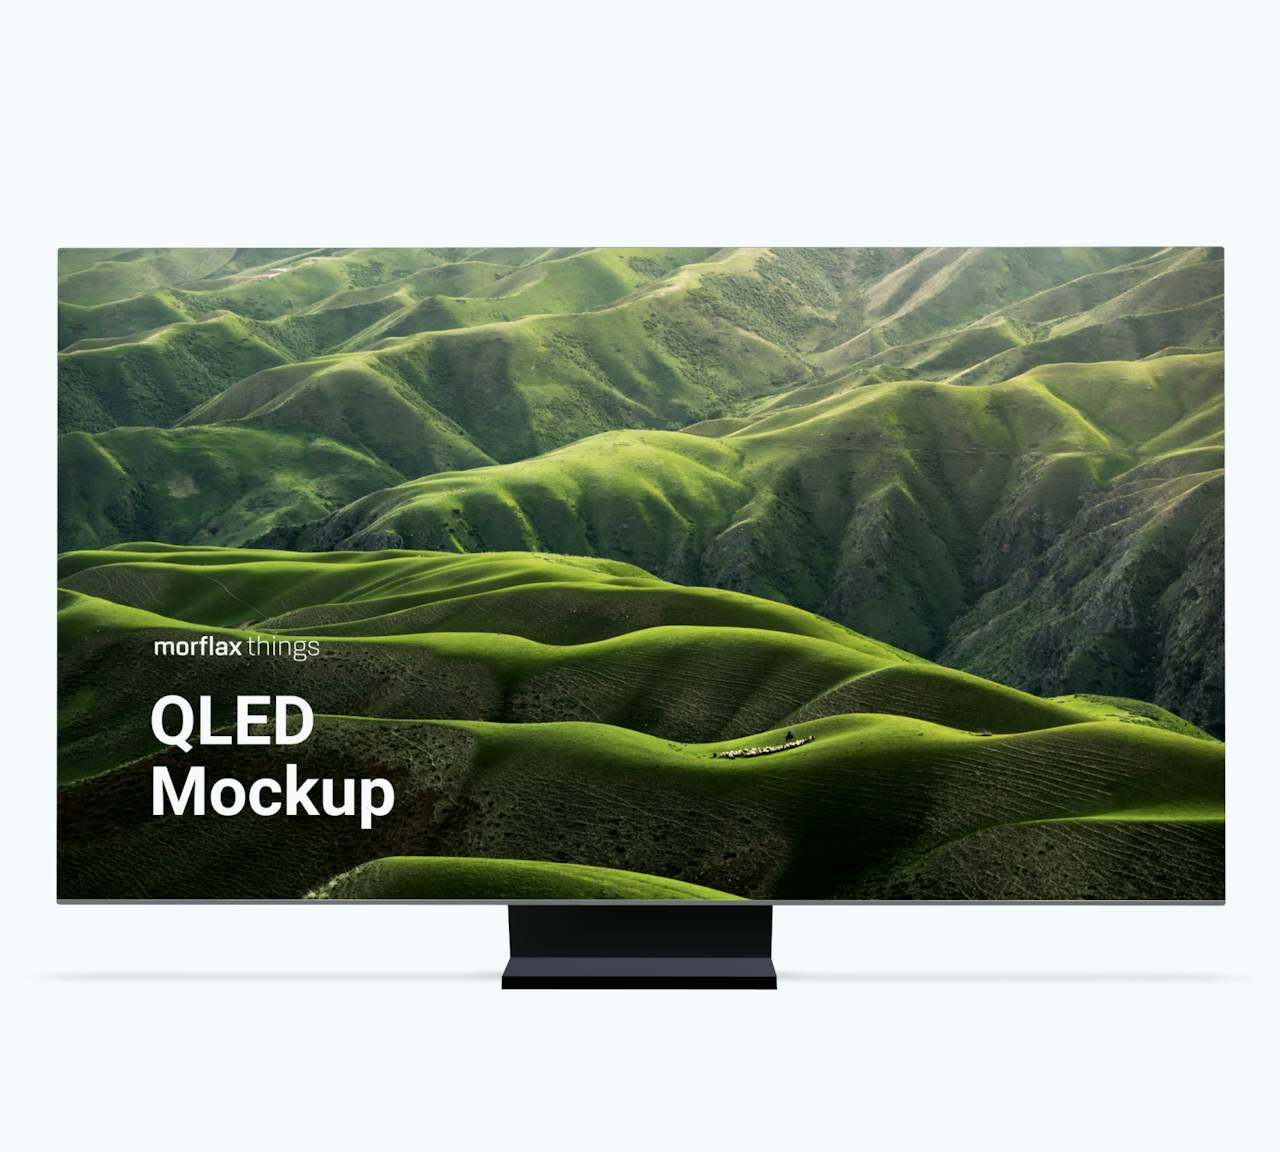 Samsung QLED TV mockup